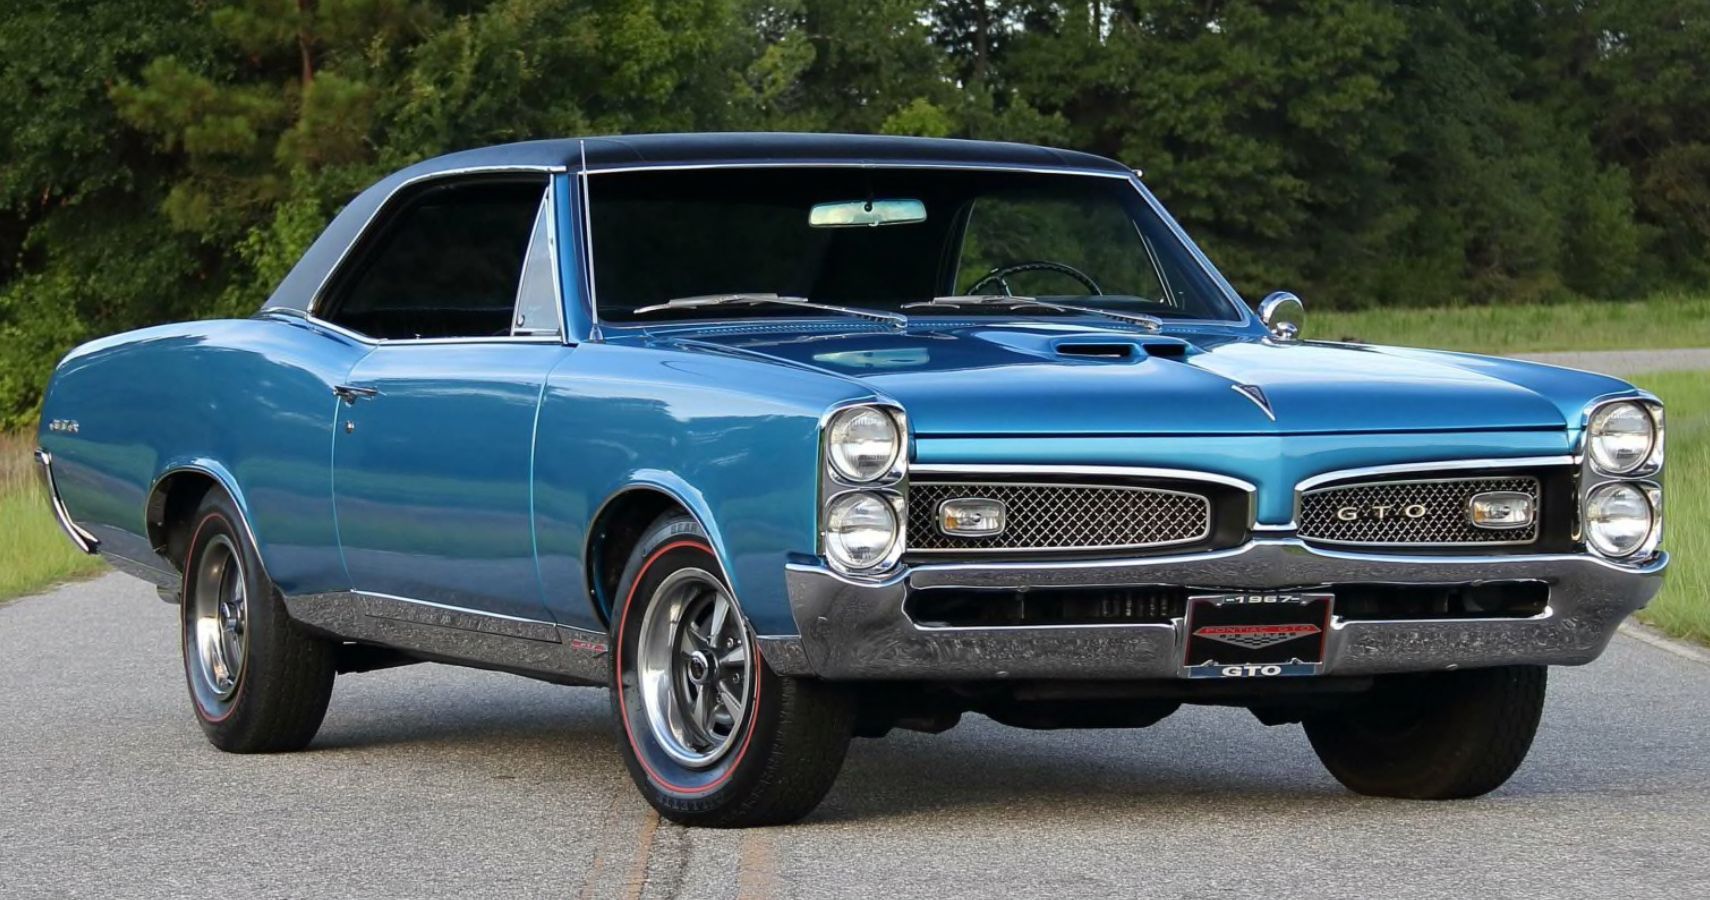 Blue 1967 Pontiac GTO Black Vinyl Top on Street